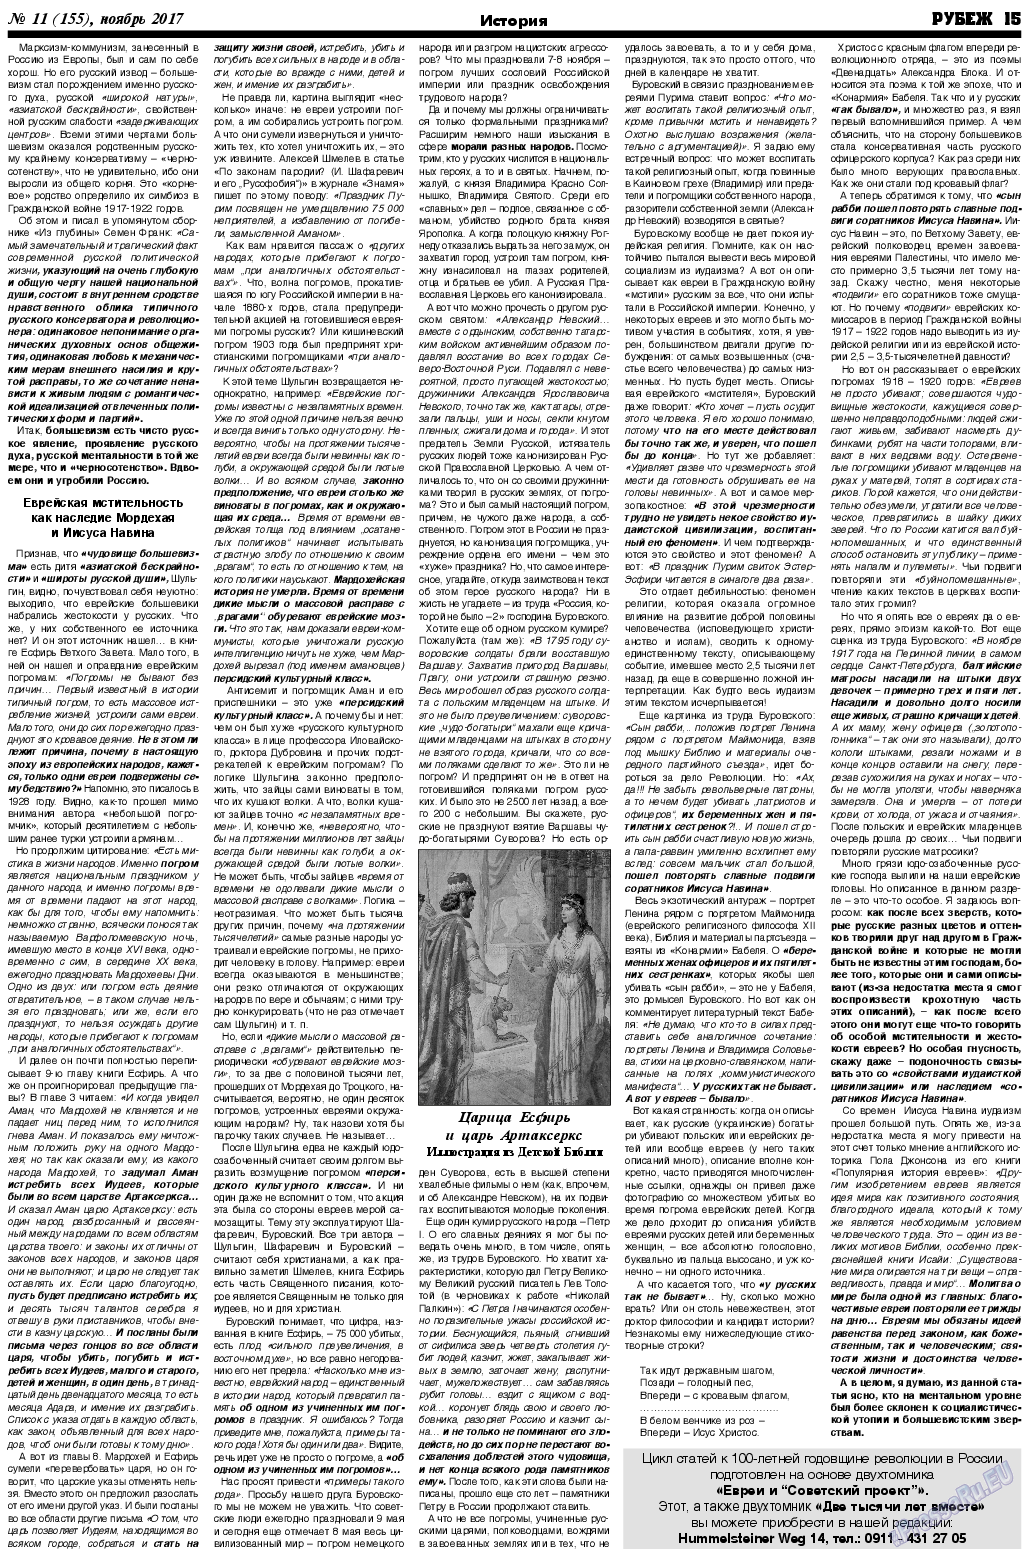 Рубеж, газета. 2017 №11 стр.15